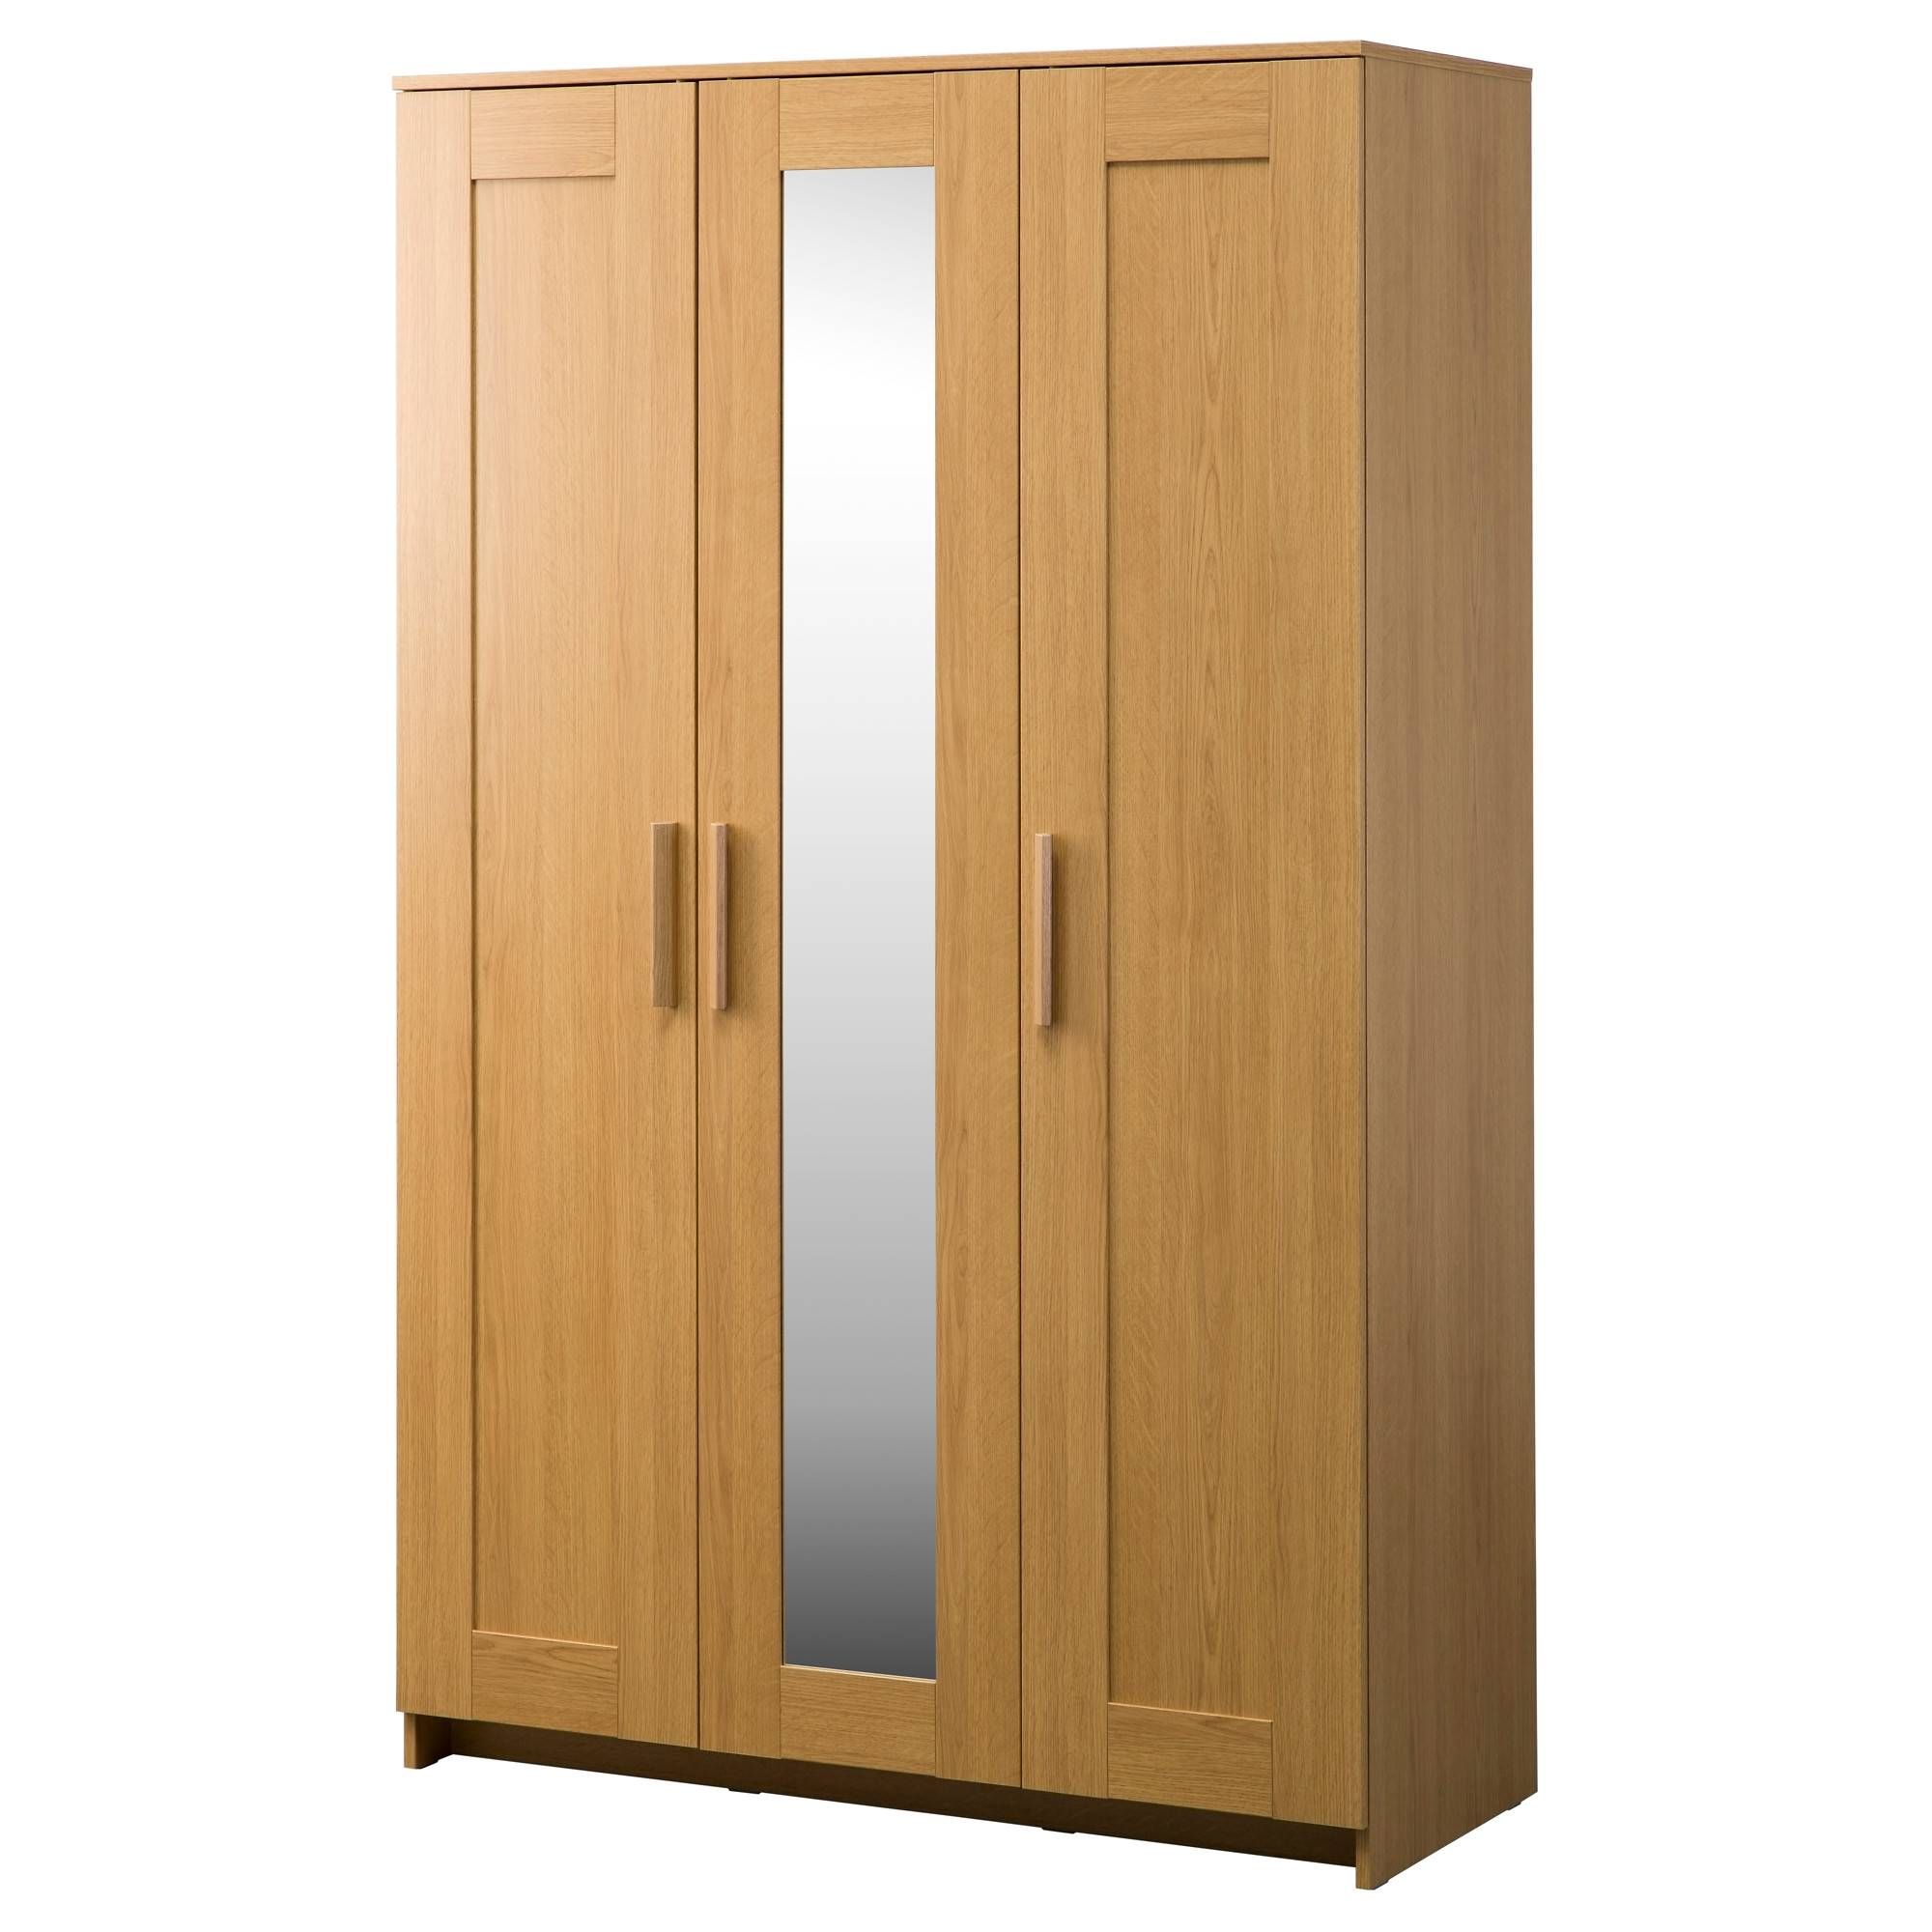 Wardrobes | Ikea Ireland – Dublin Inside Solid Wood Fitted Wardrobe Doors (View 30 of 30)